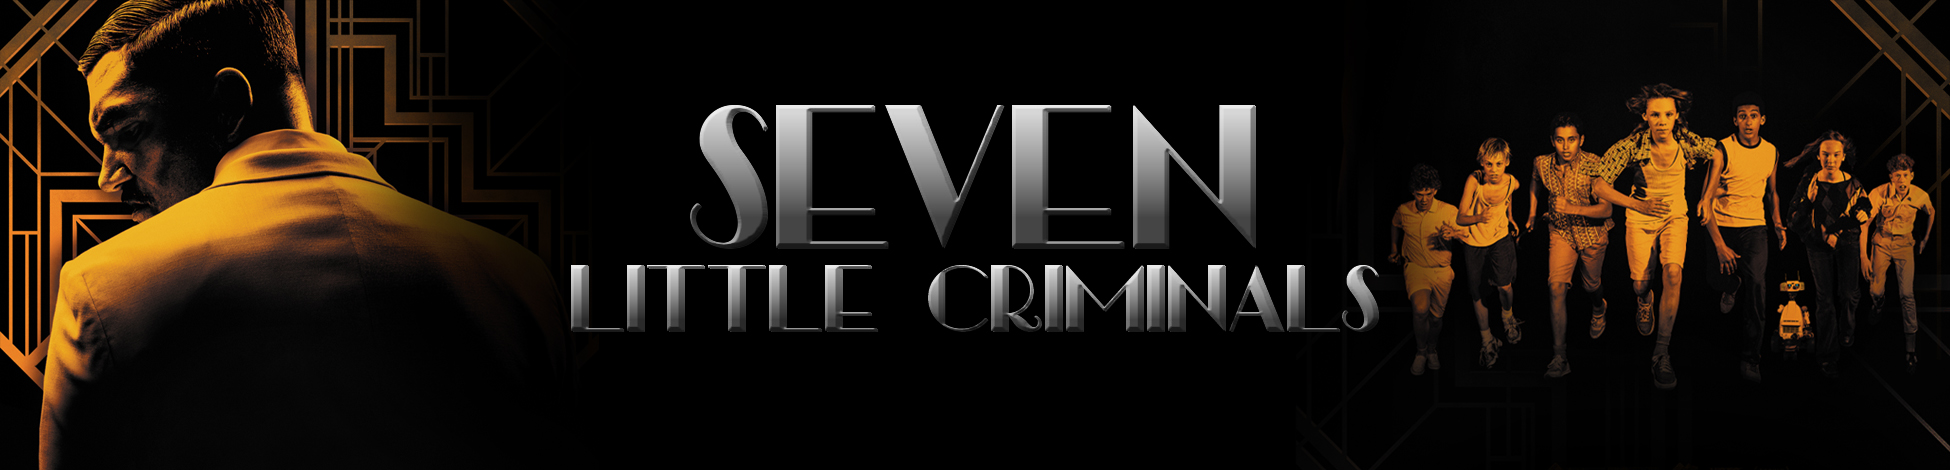 Seven Little Criminals